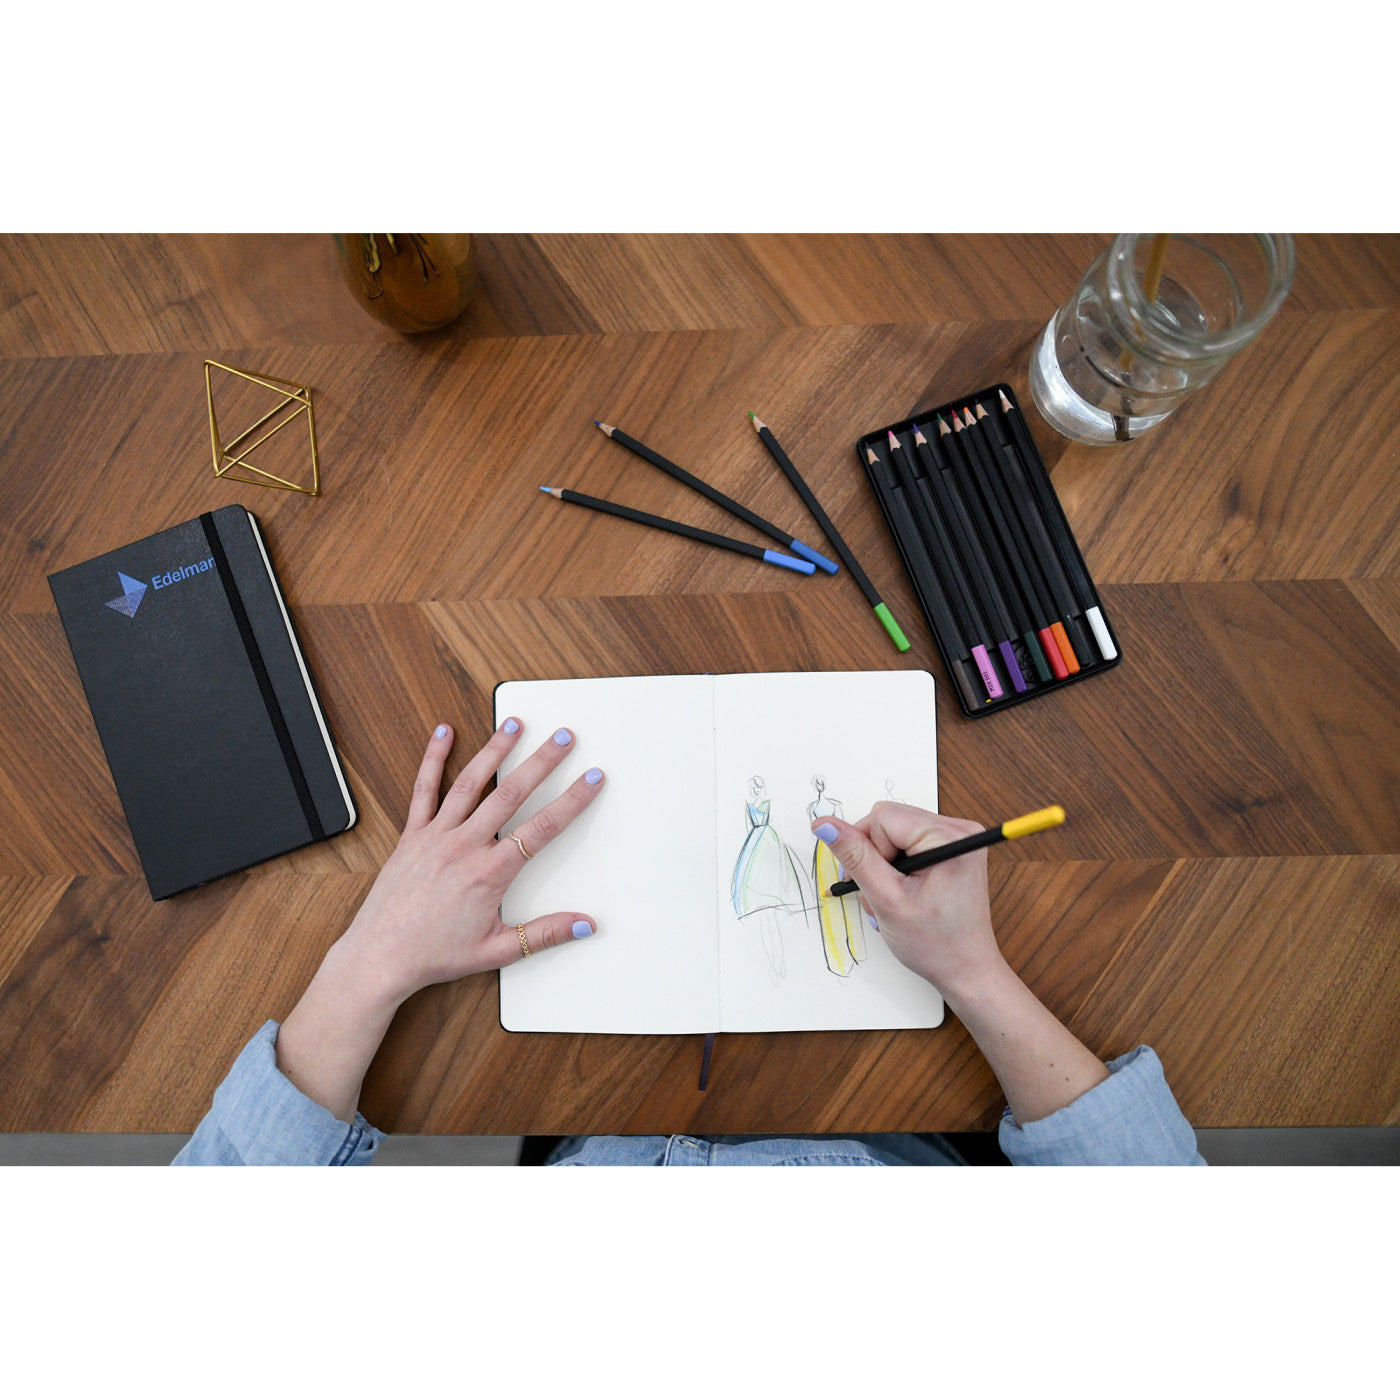 Moleskine Sketching Kit Watercolor Pencils